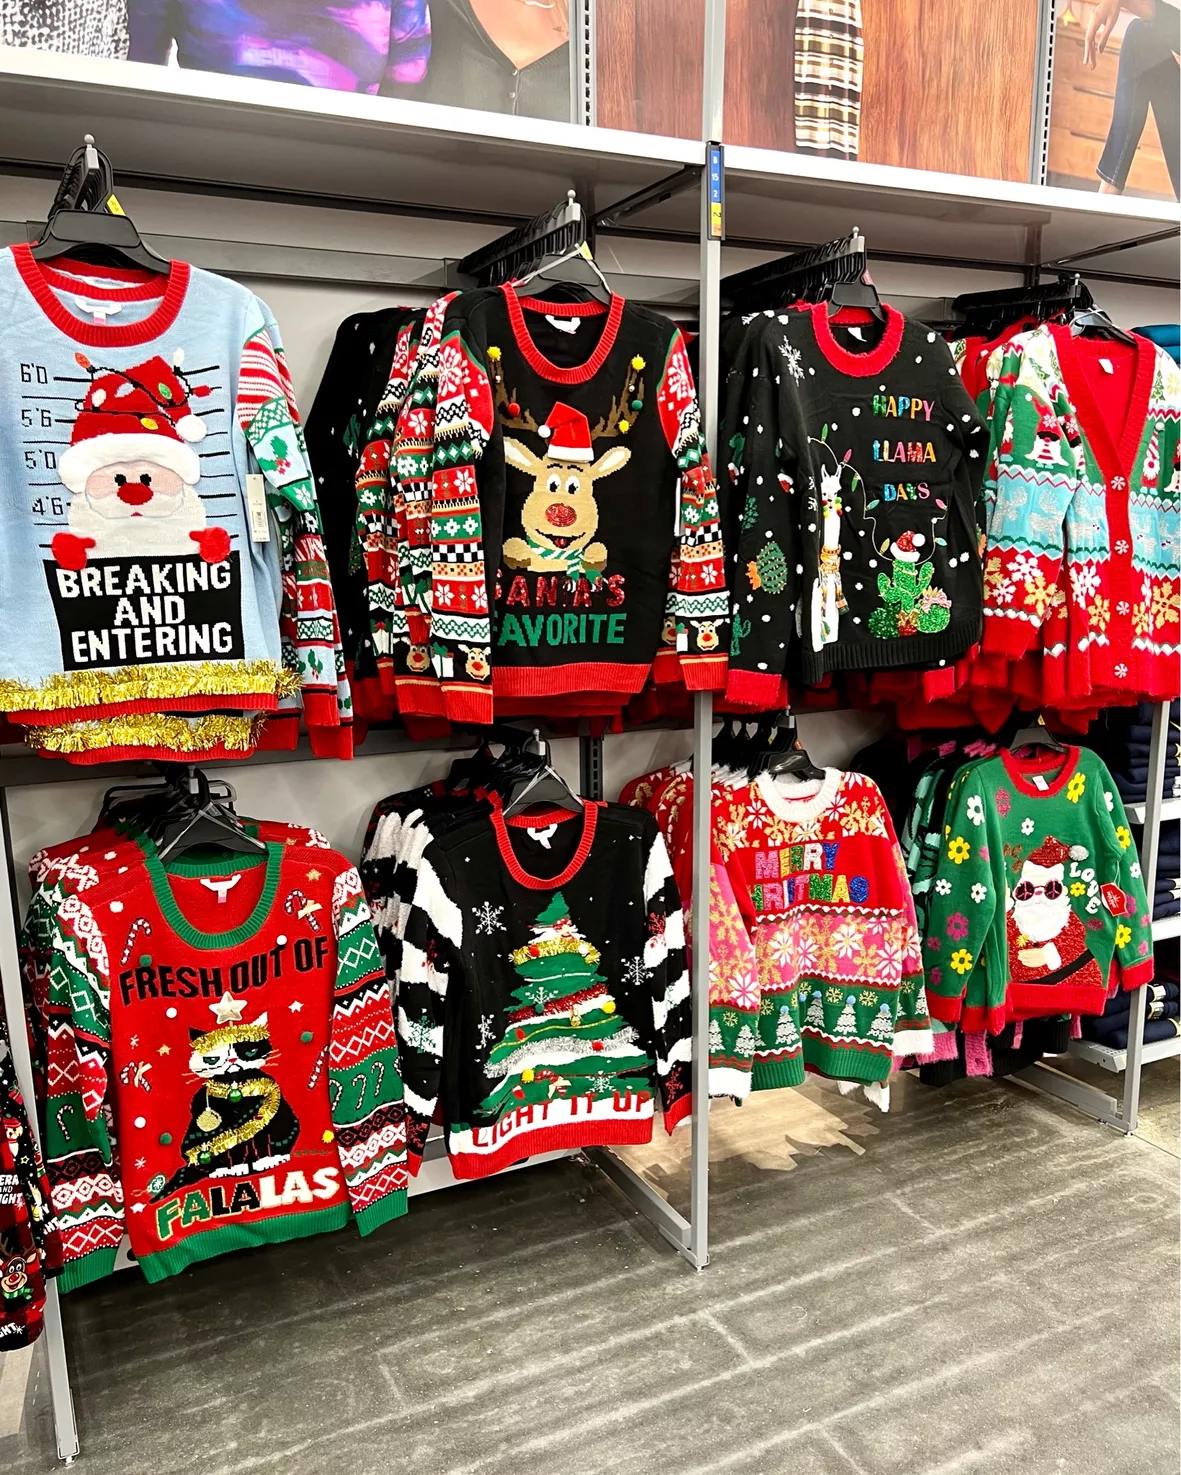 No Boundaries Juniors' Christmas Sweater 